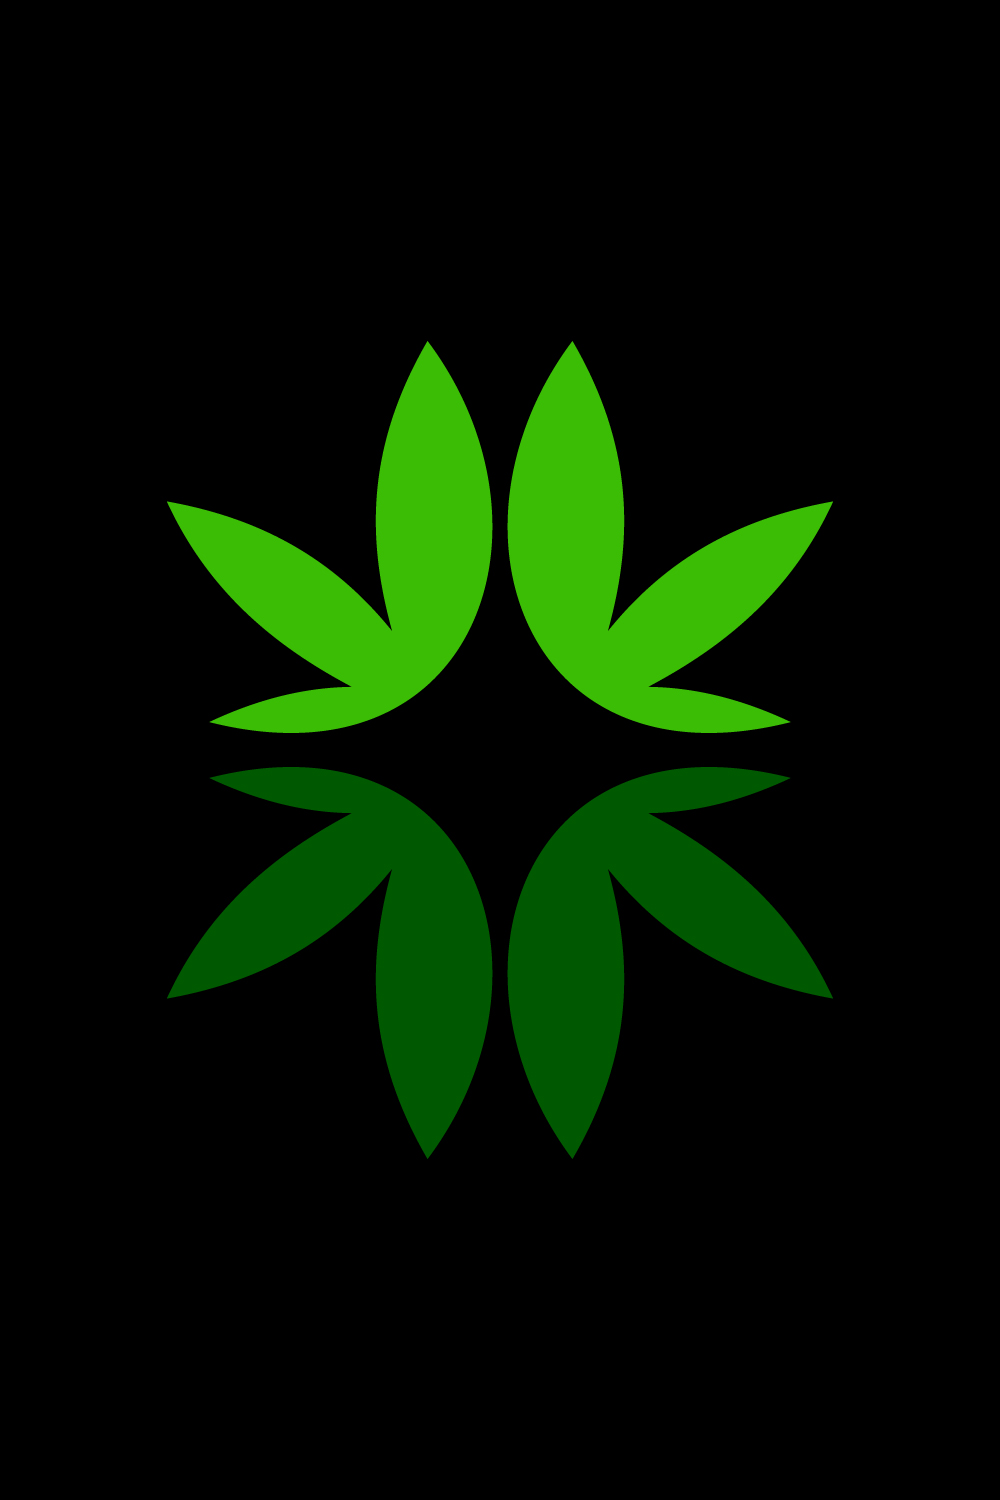 Leaf, plant, logo Green leaves, nature symbol, Vector design template pinterest preview image.